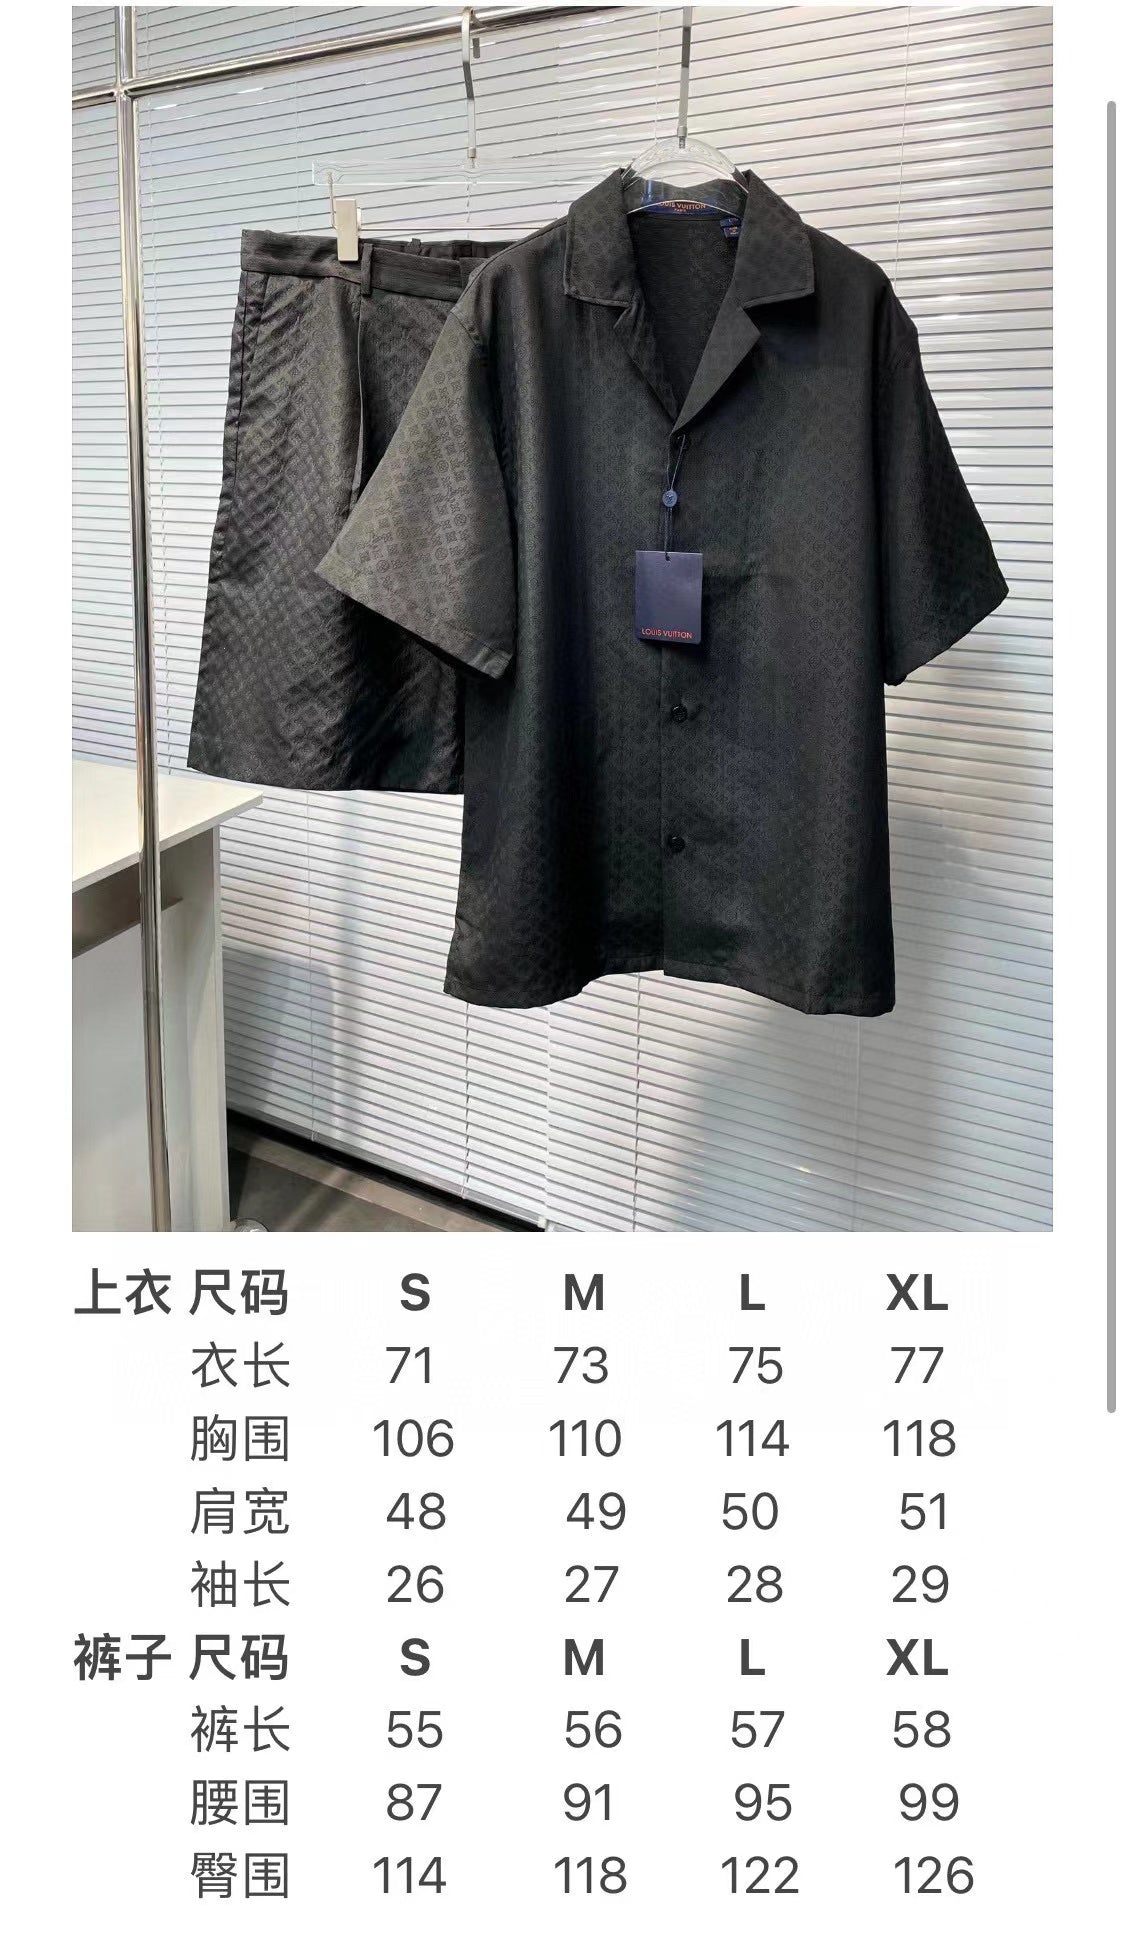 Black Shirt